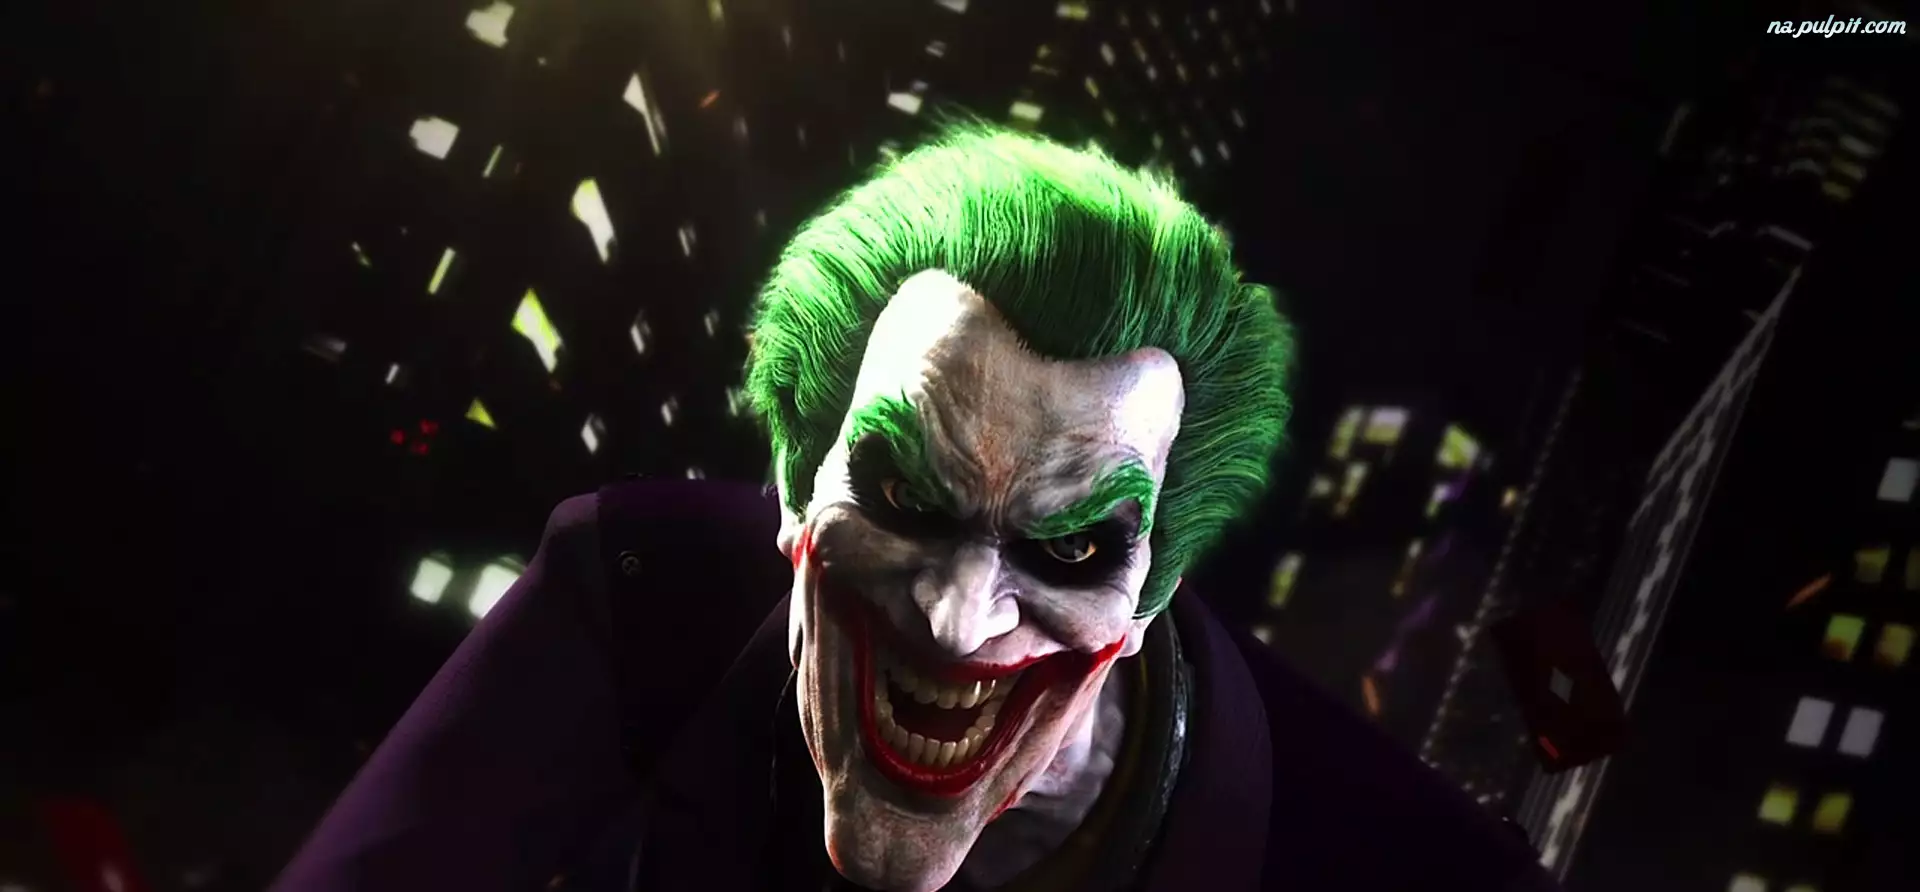 Joker, Injustice God Among Us